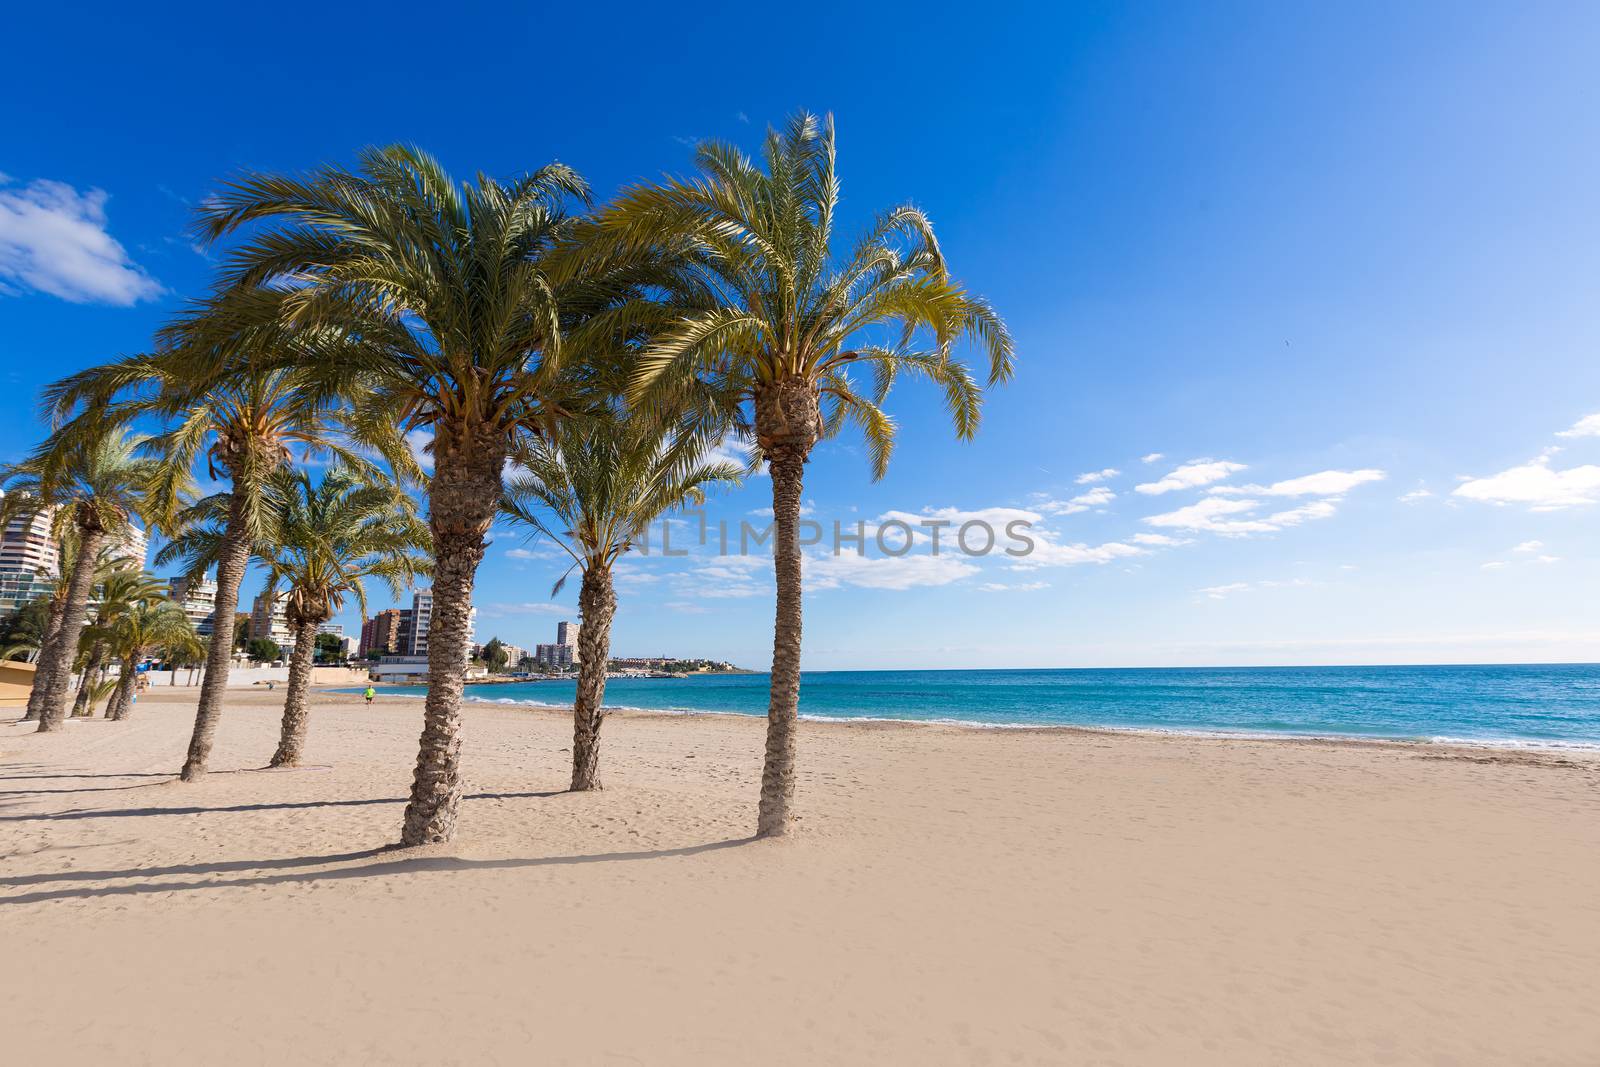 Alicante San Juan beach of La Albufereta with palms trees in Mediterranean Spain